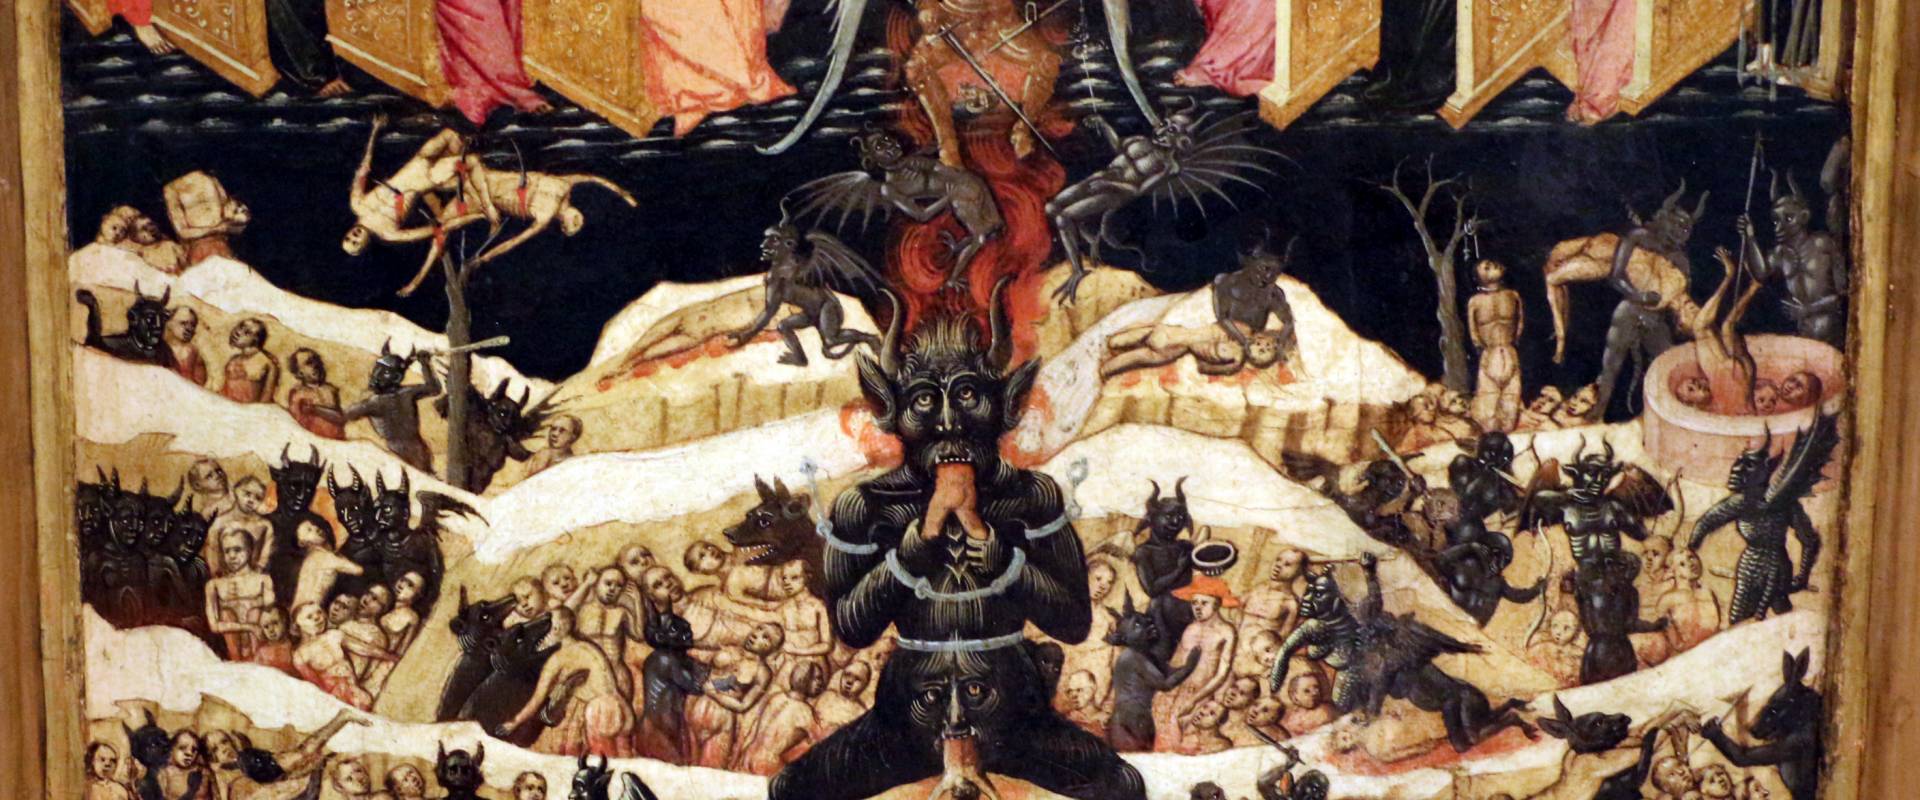 Maestro dell'avicenna, paradiso e inferno, 1435 ca. (bo) 02 photo by Sailko